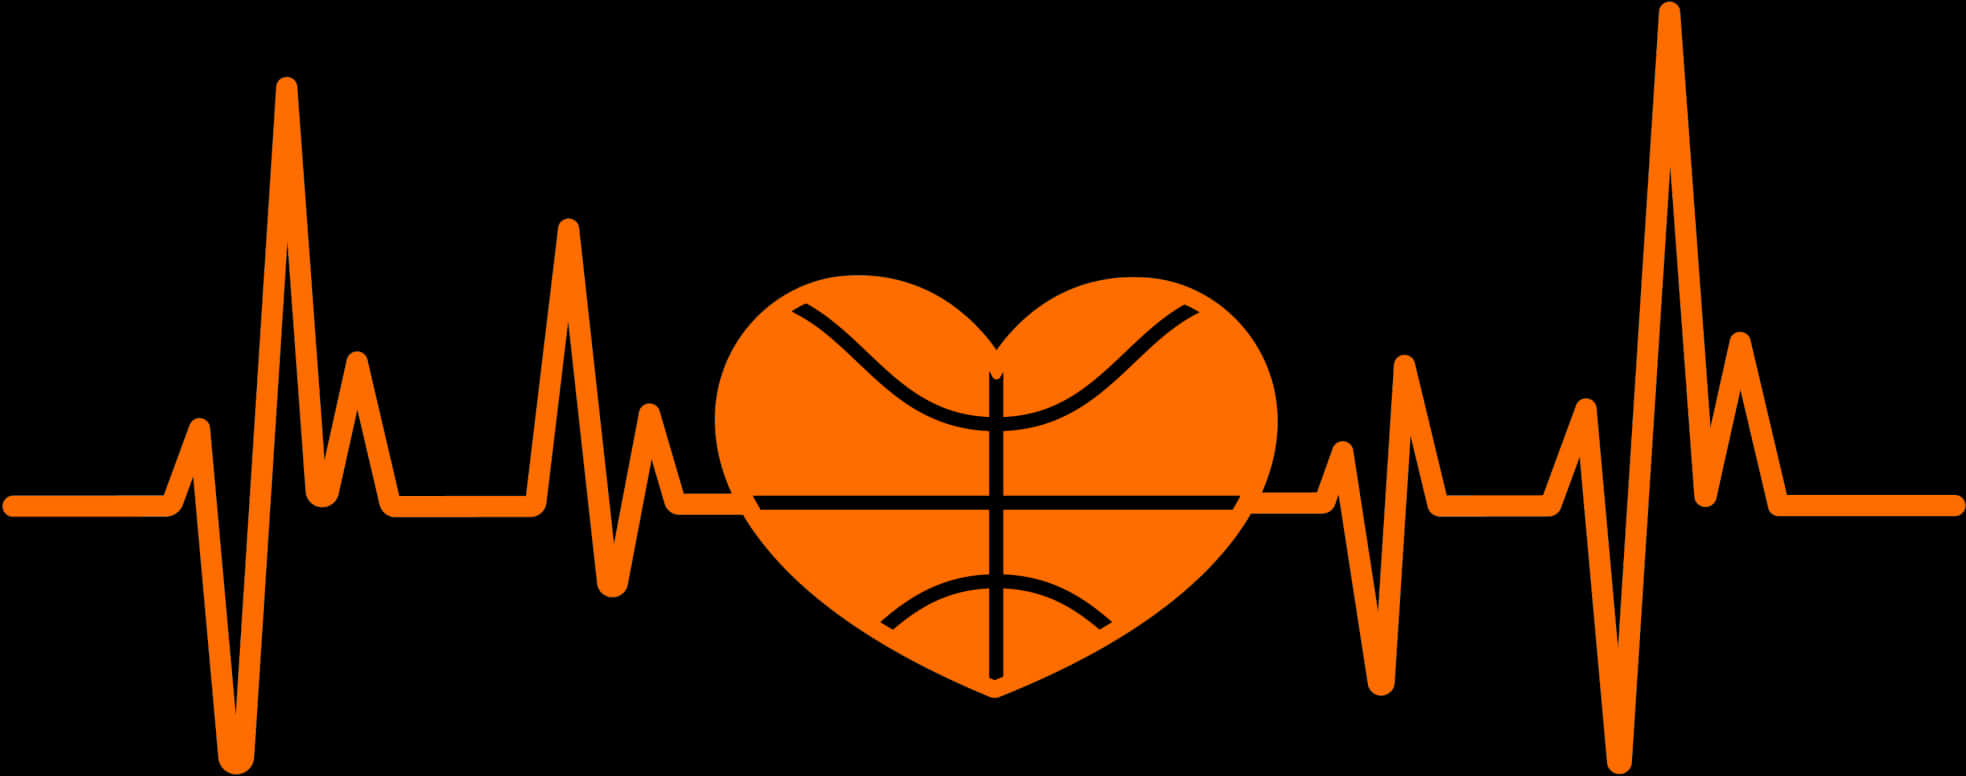 Heartbeat Electrocardiogramwith Basketball PNG